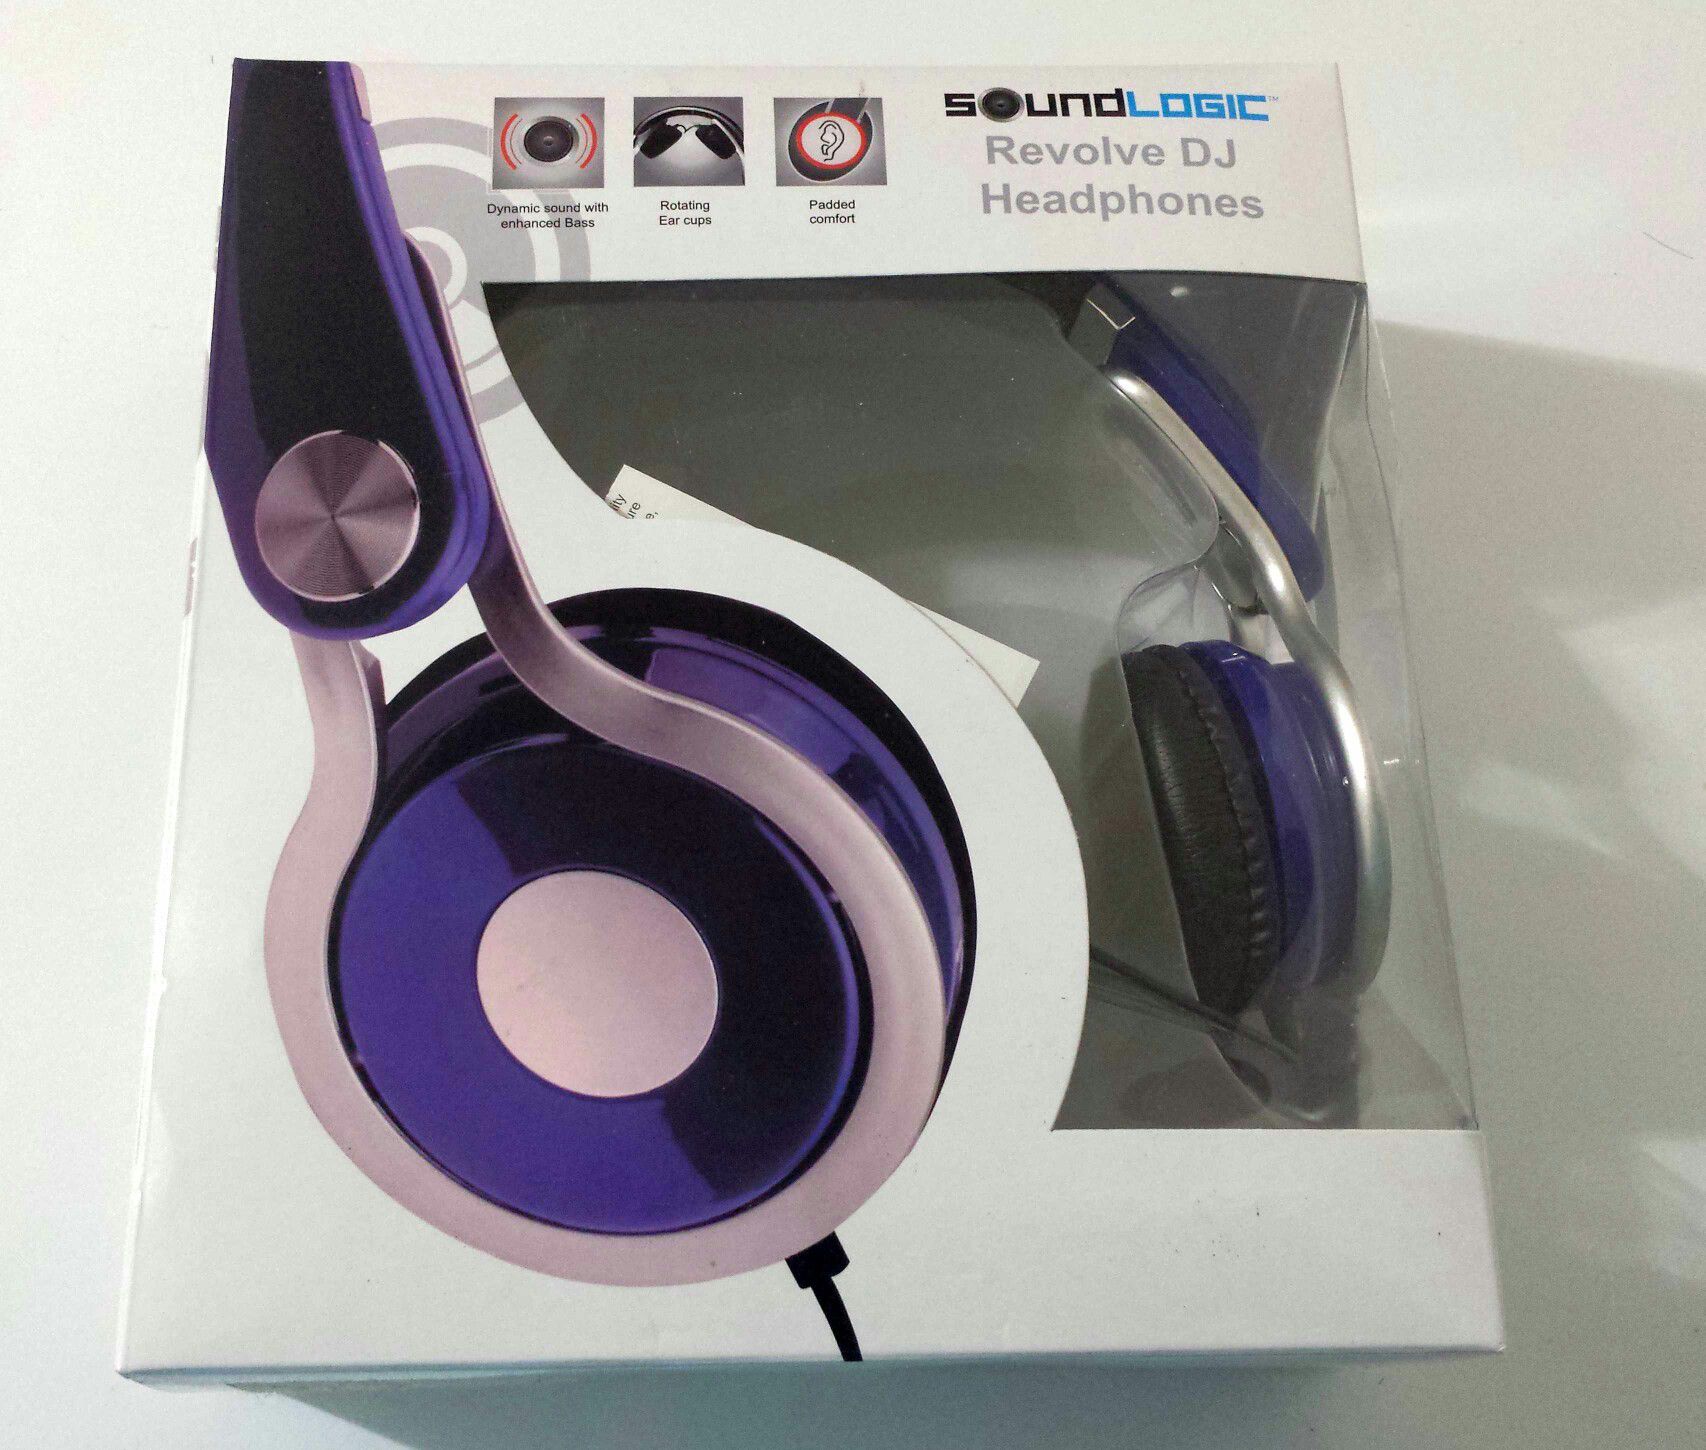 Soundlogic foldable DJ Headphones